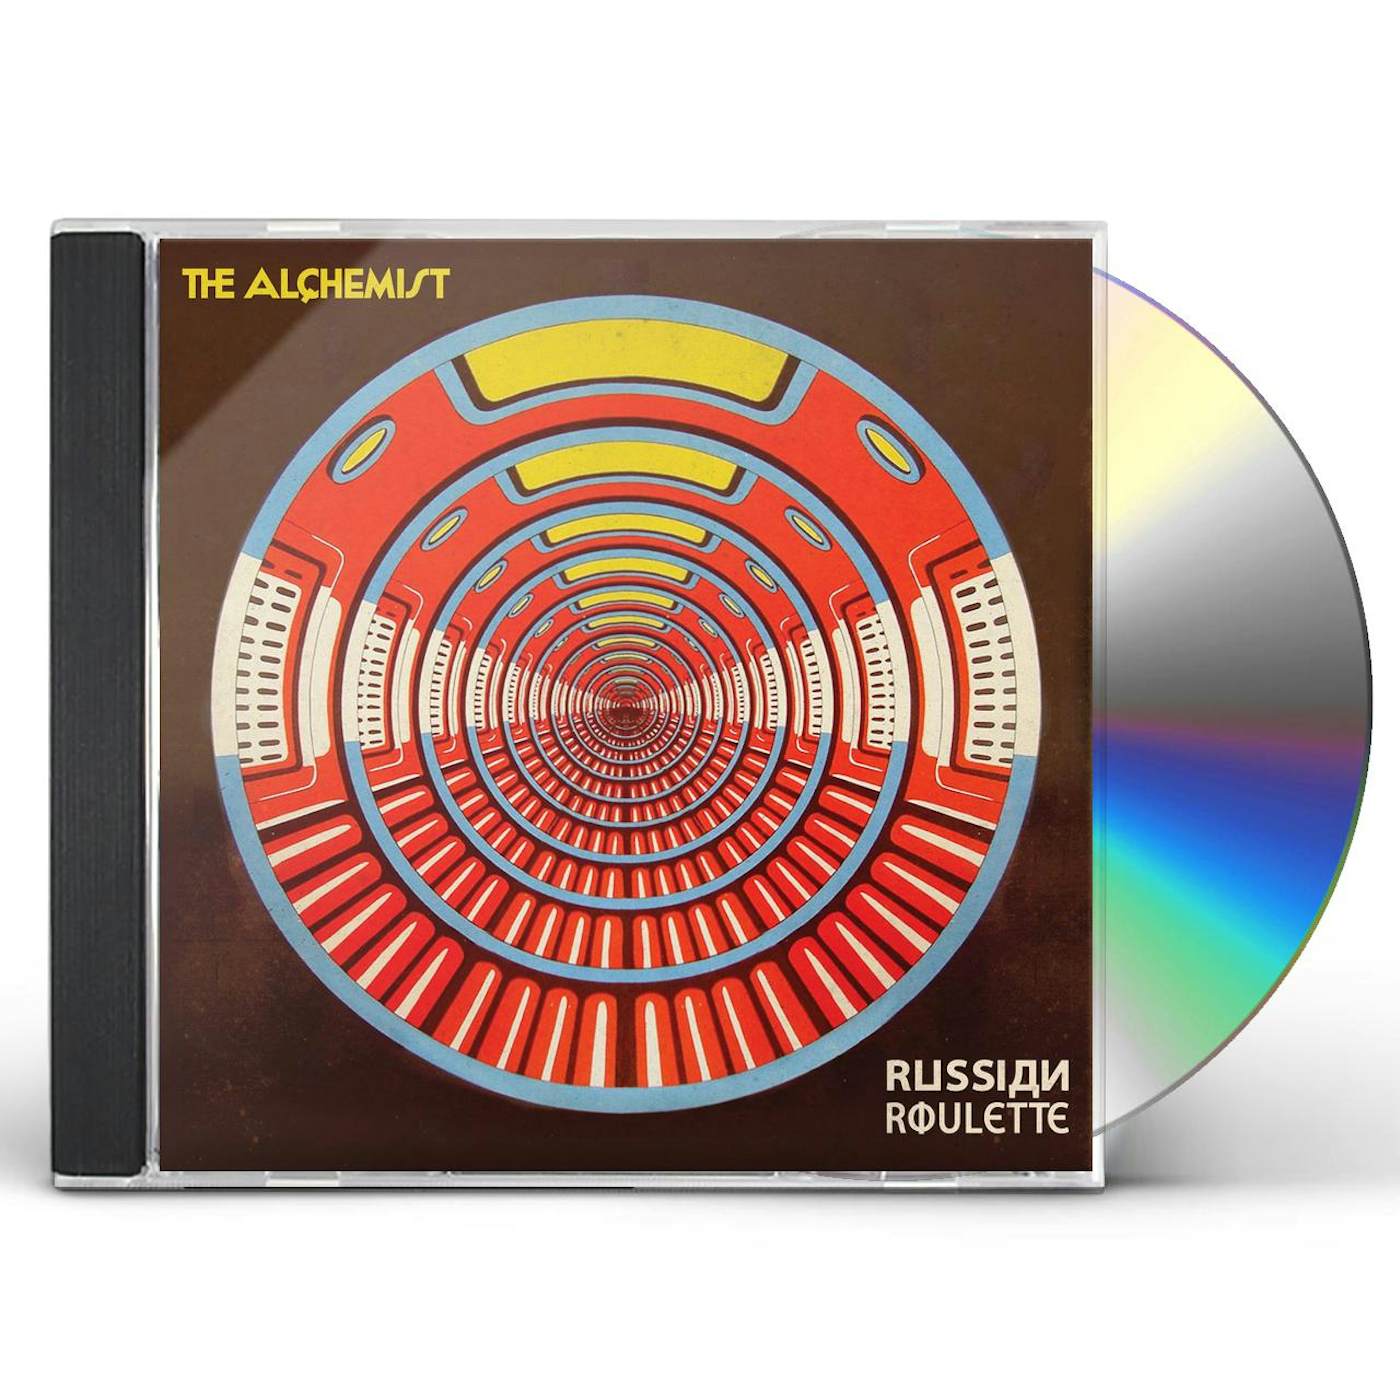 The Alchemist RUSSIAN ROULETTE CD